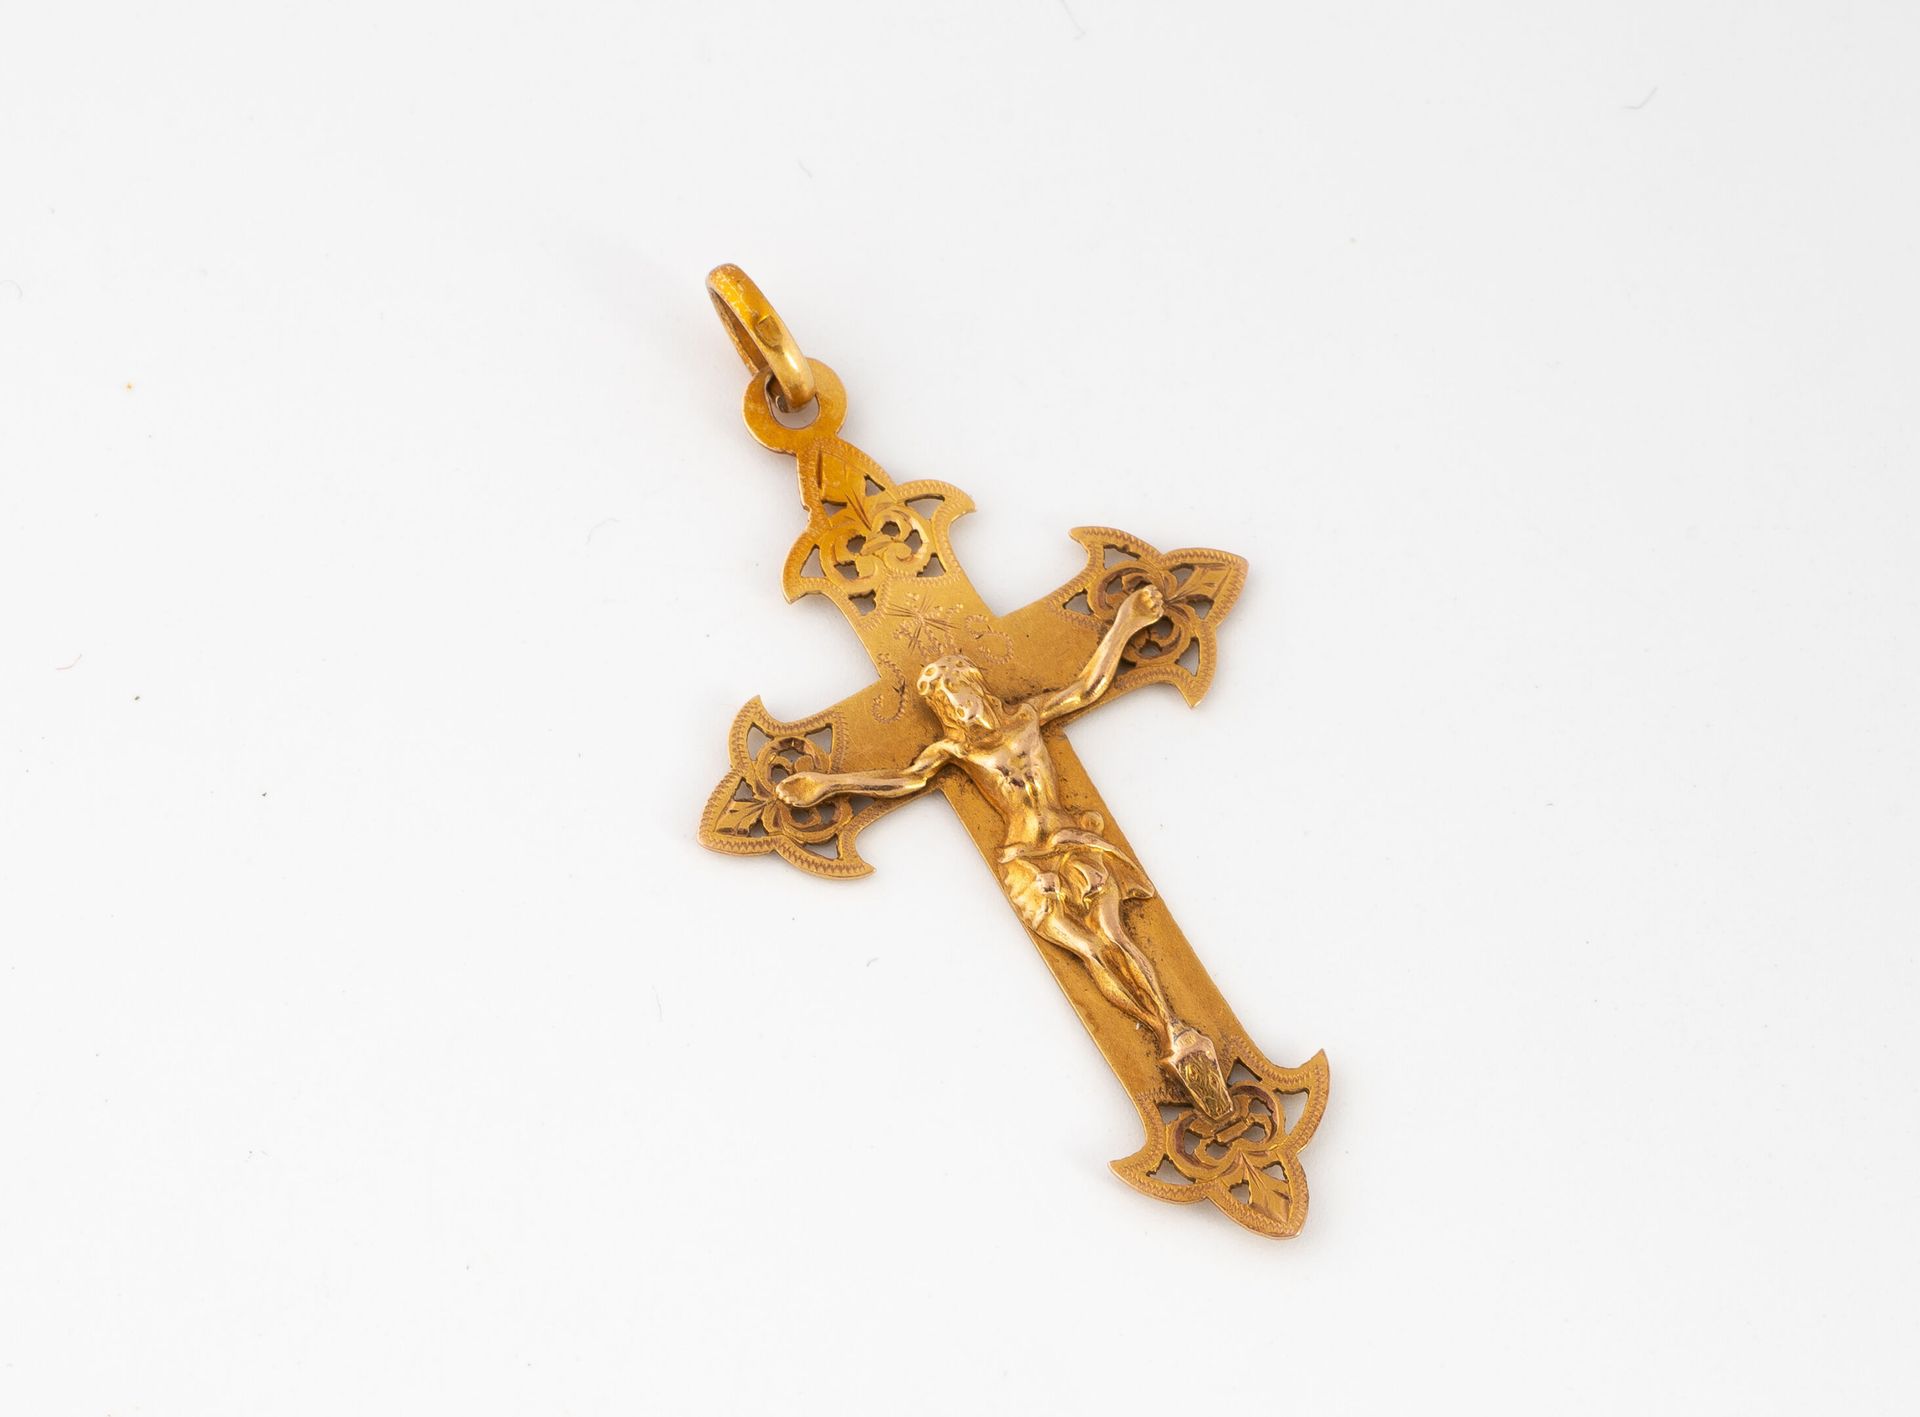 Null Colgante cruz de oro amarillo (750).
Peso : 3,0 g. - H. 4,5 cm aprox.
Araña&hellip;